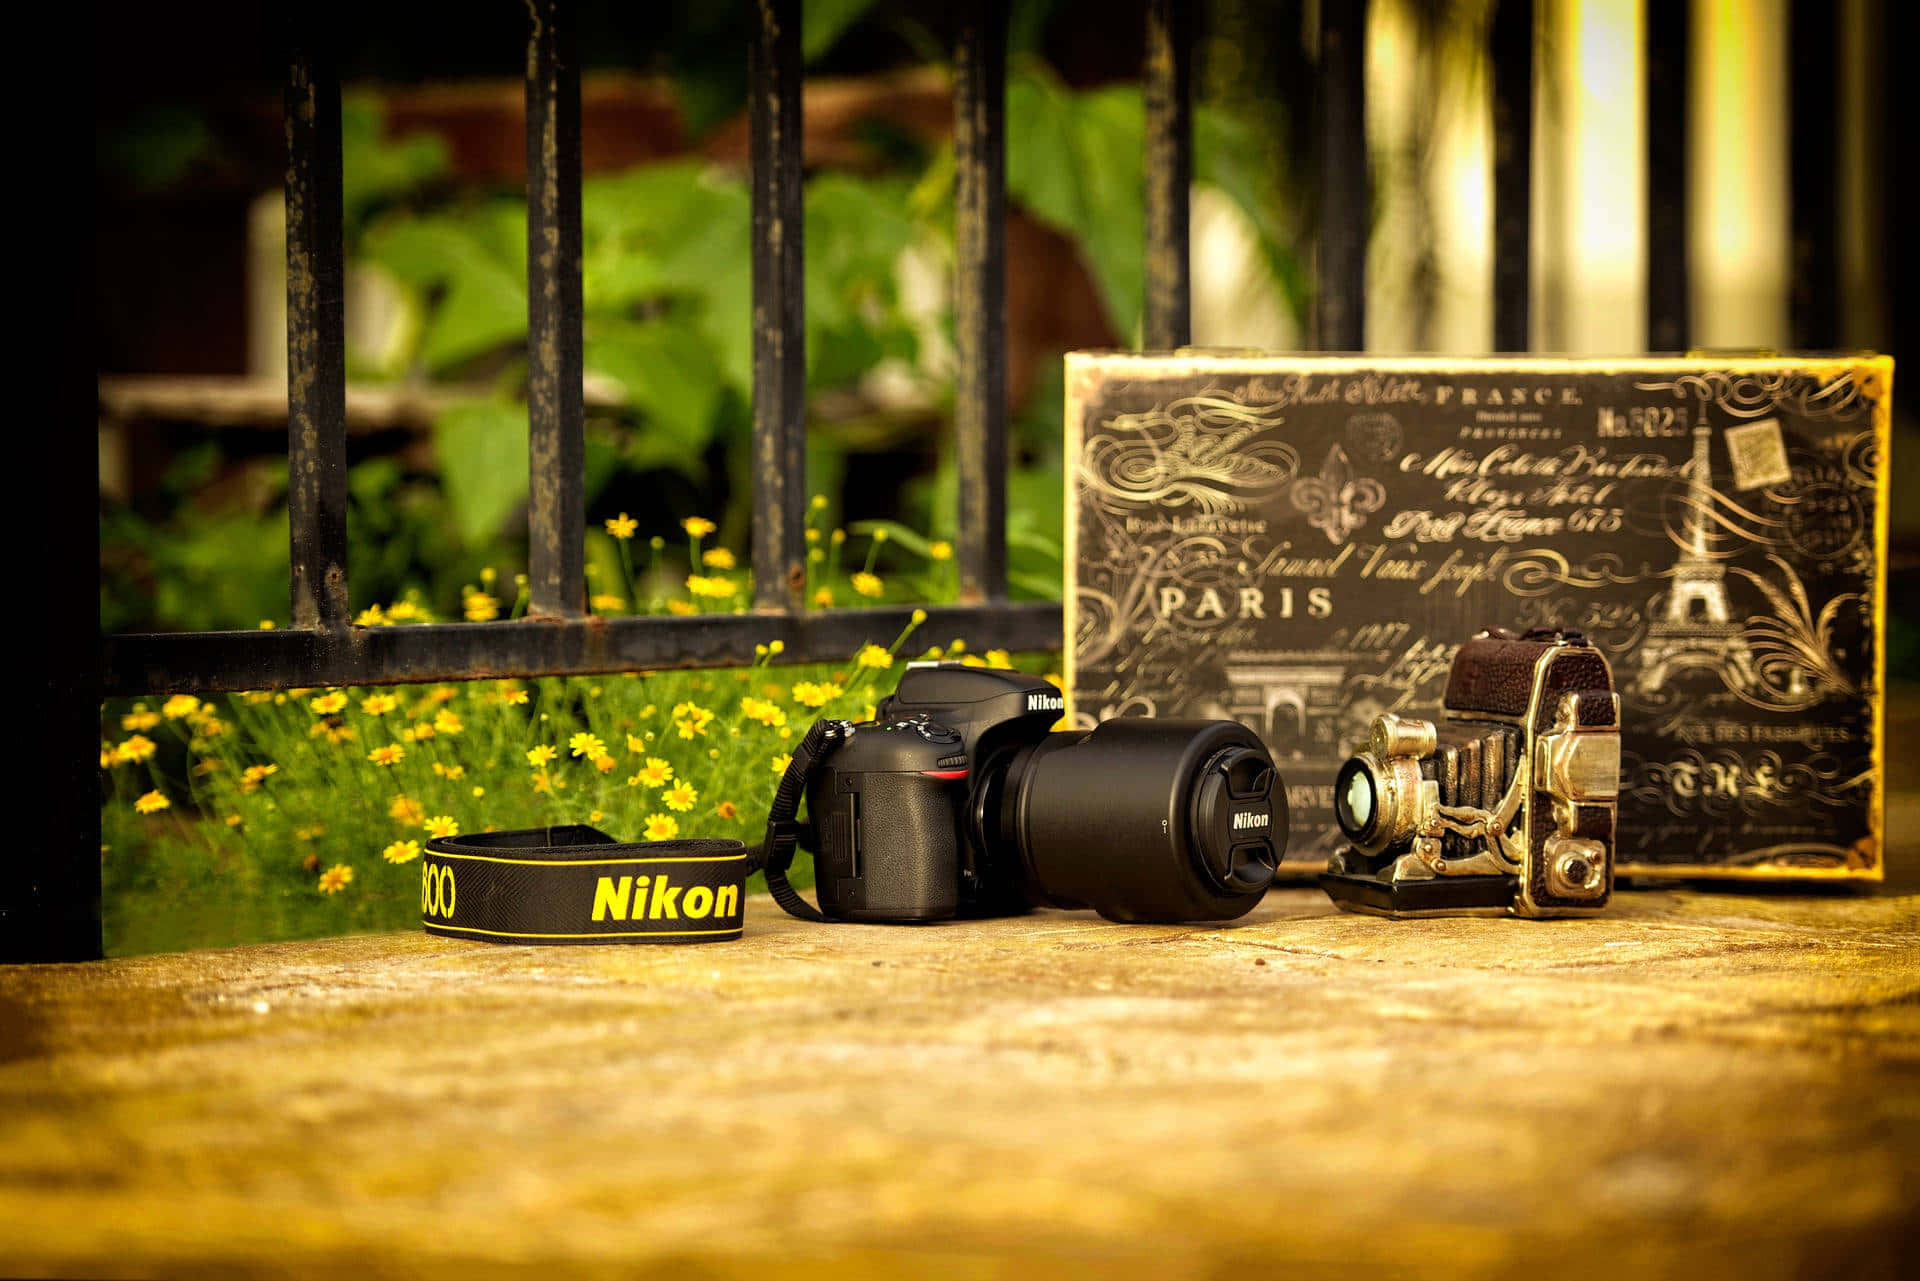 Vintage Nikon Camera: Capturing Timeless Moments